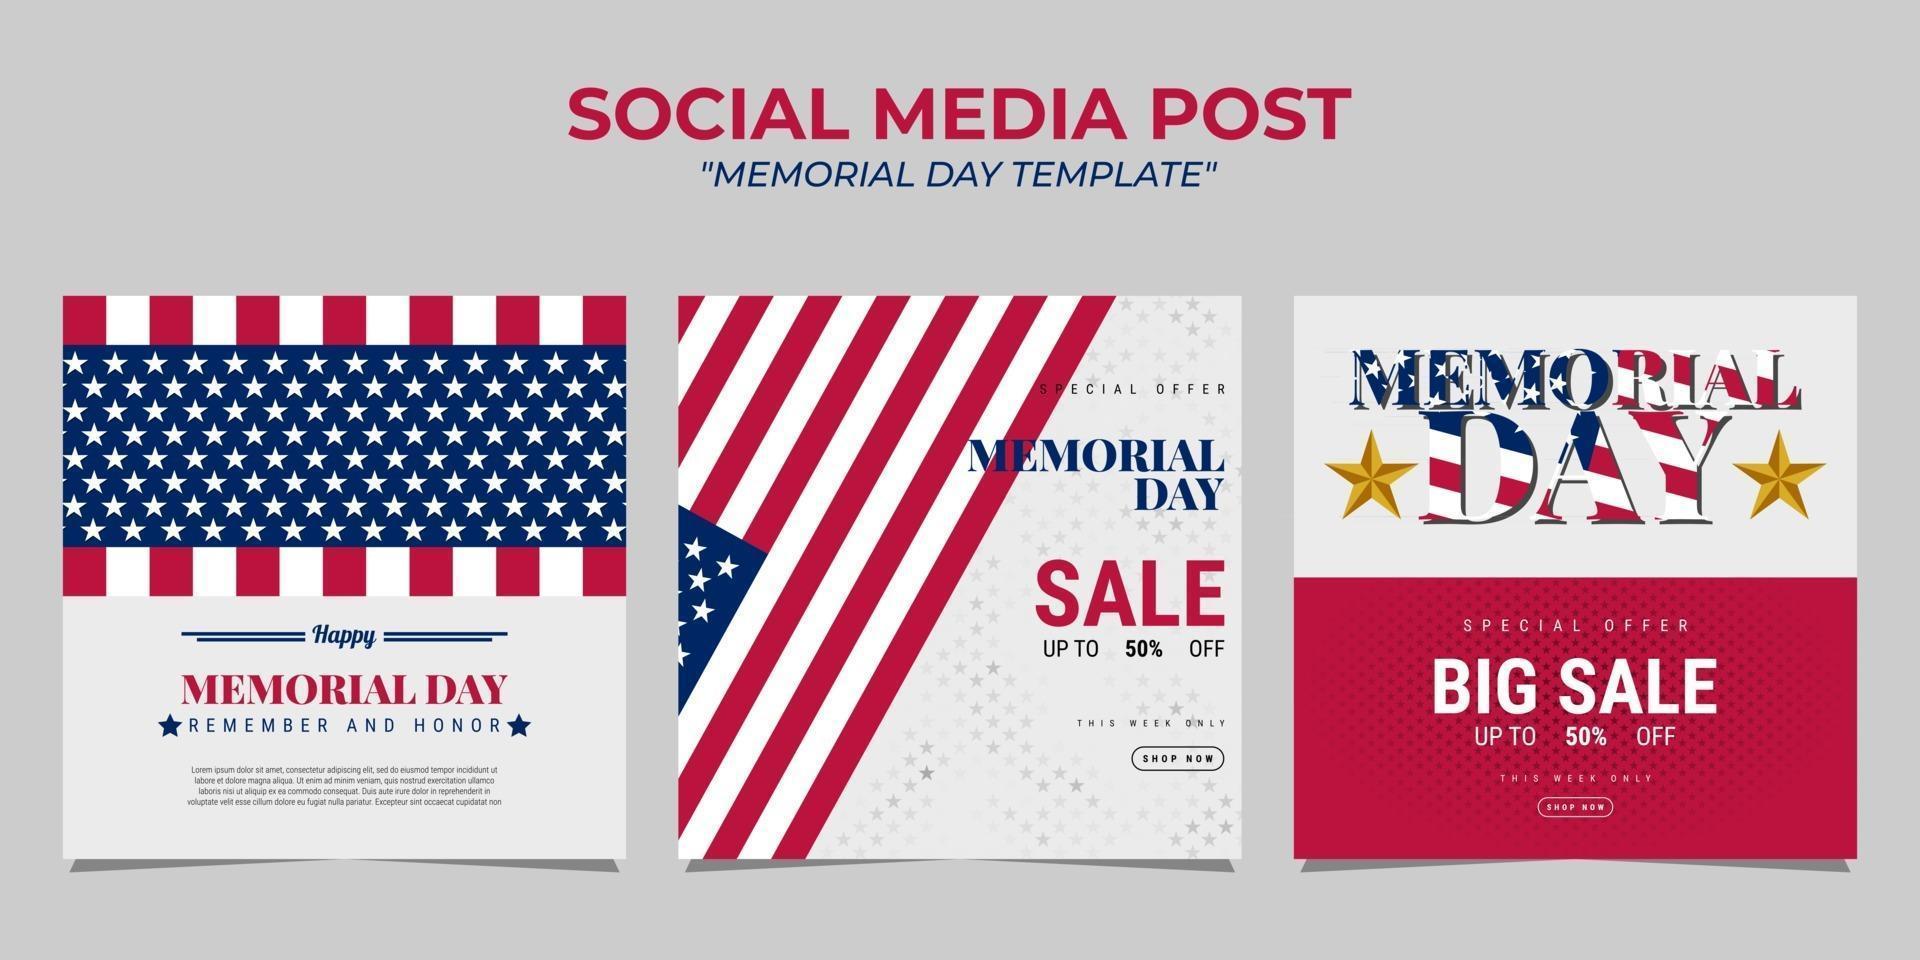 Memorial Day social media post template design vector